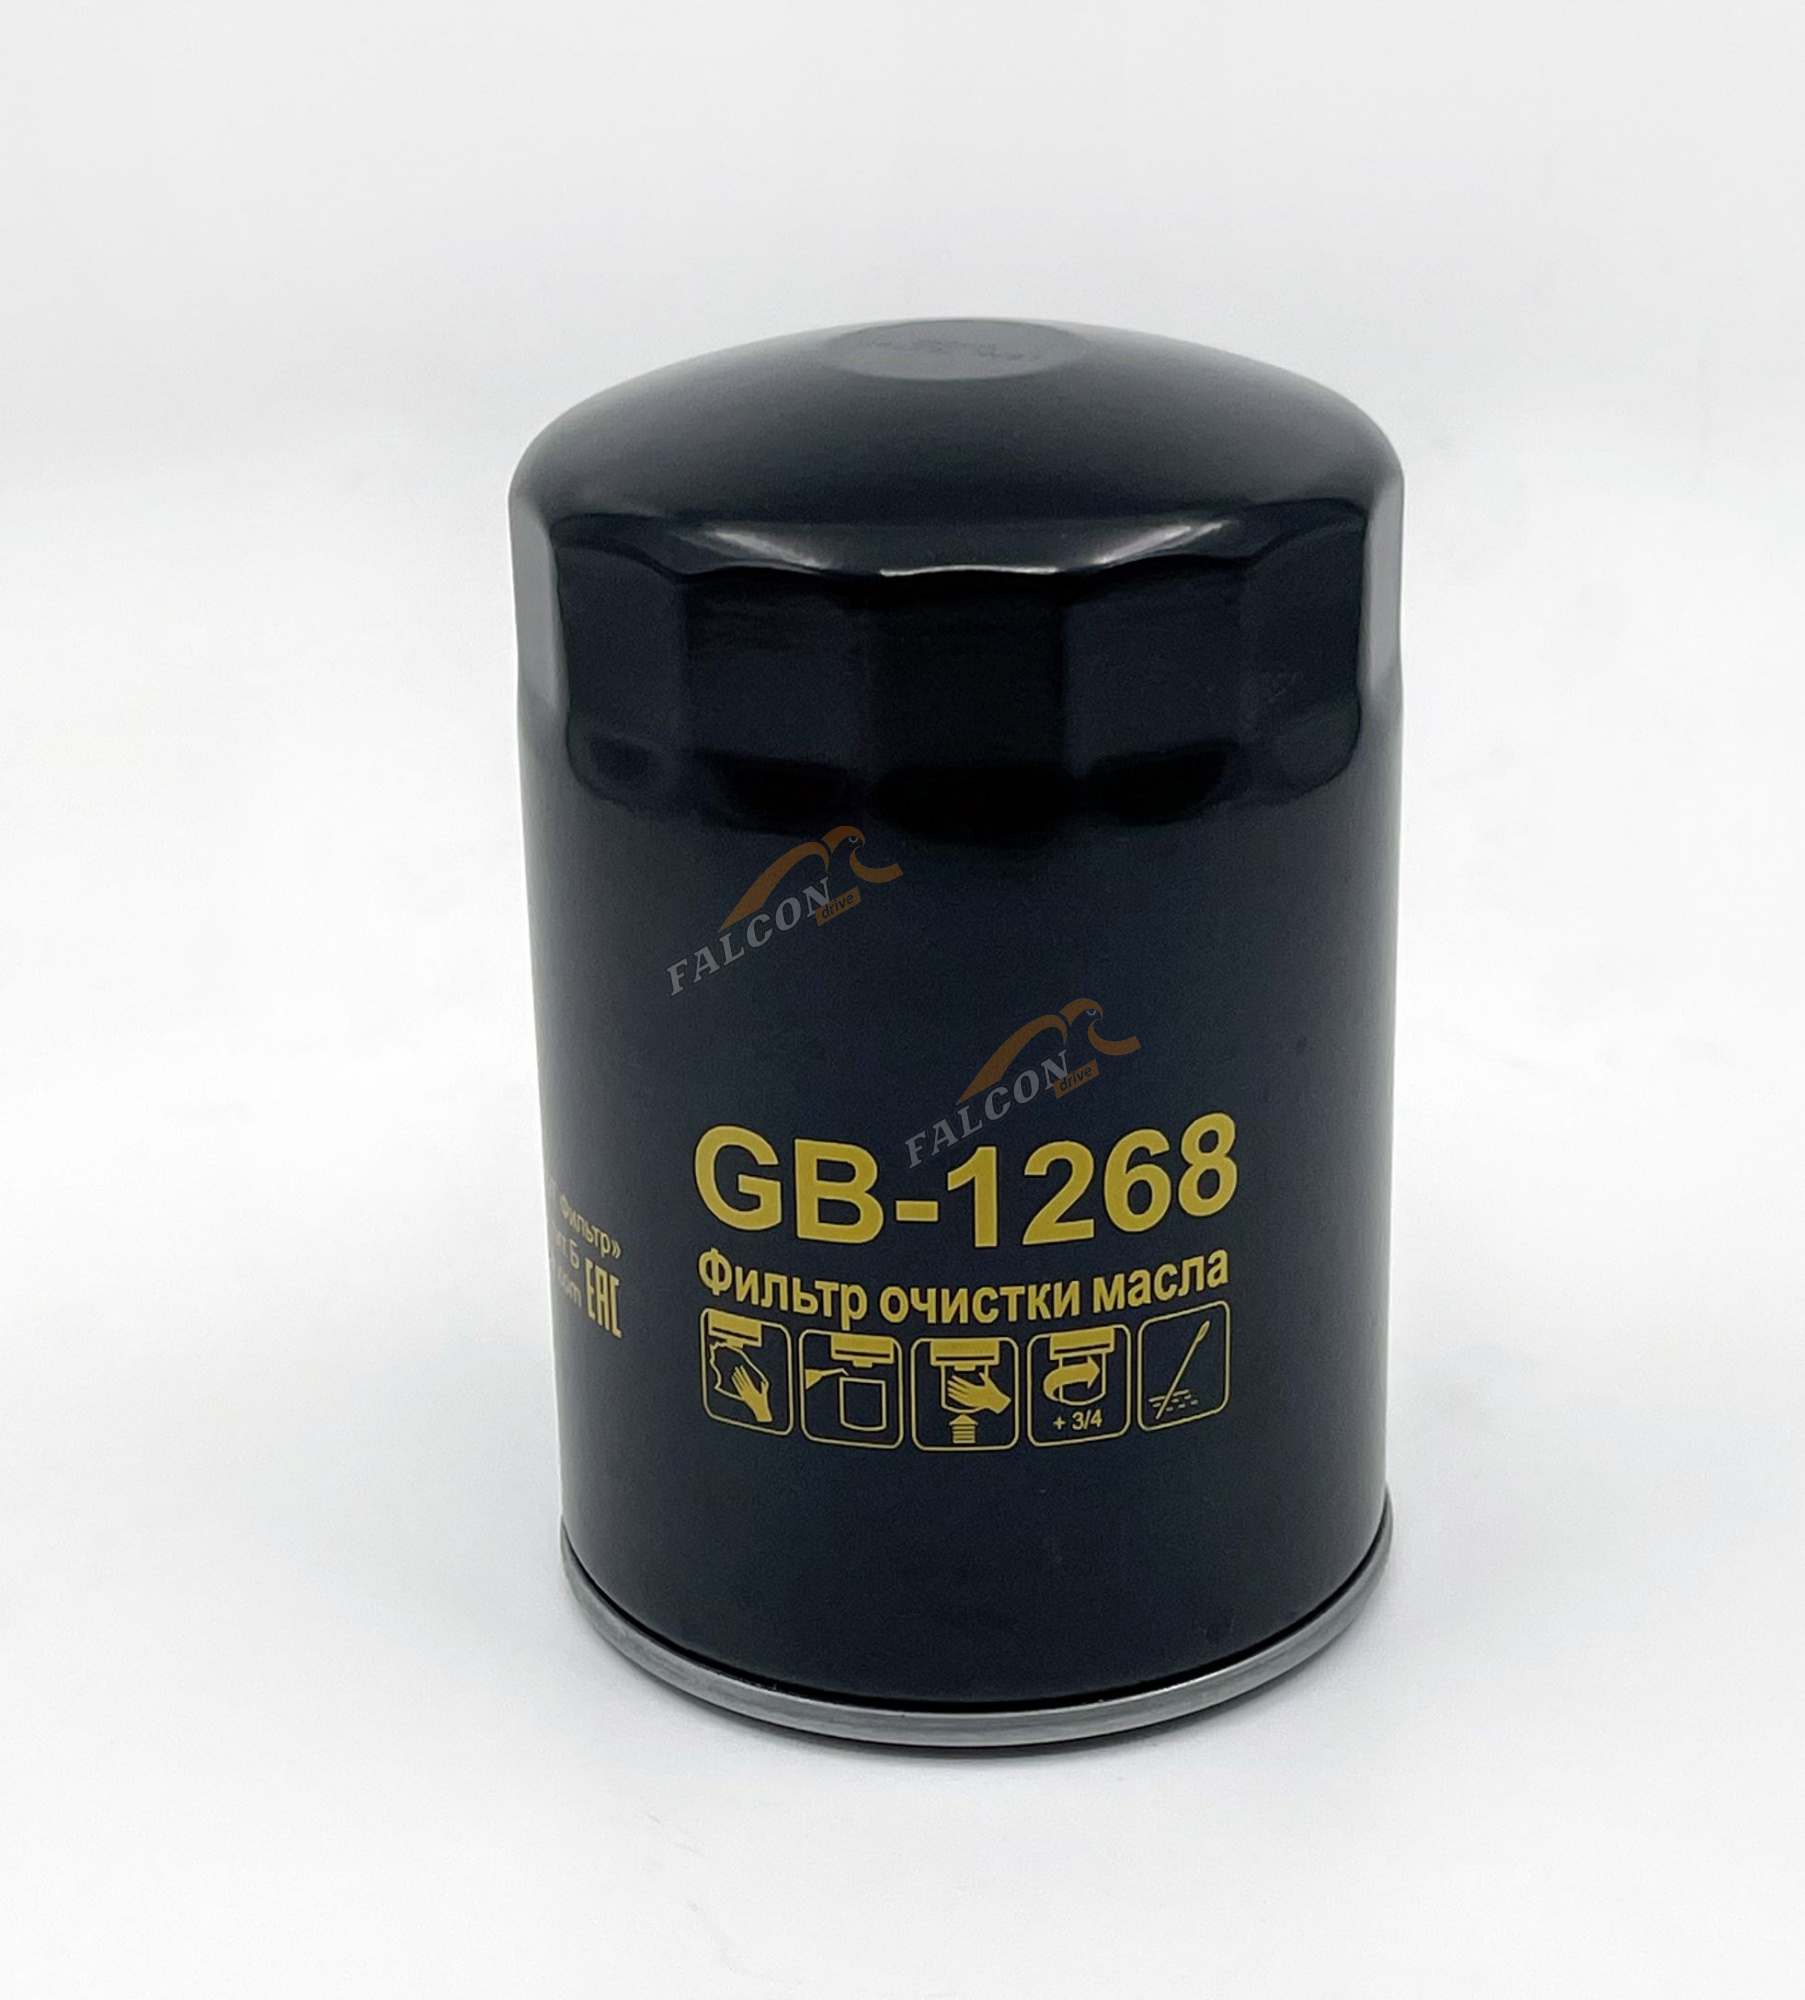 Фильтр масляный (БИГ) GB-1268 MITSUBISH L200 Pajero II III IV 2.8 3.2 FYSO Canter 1993-